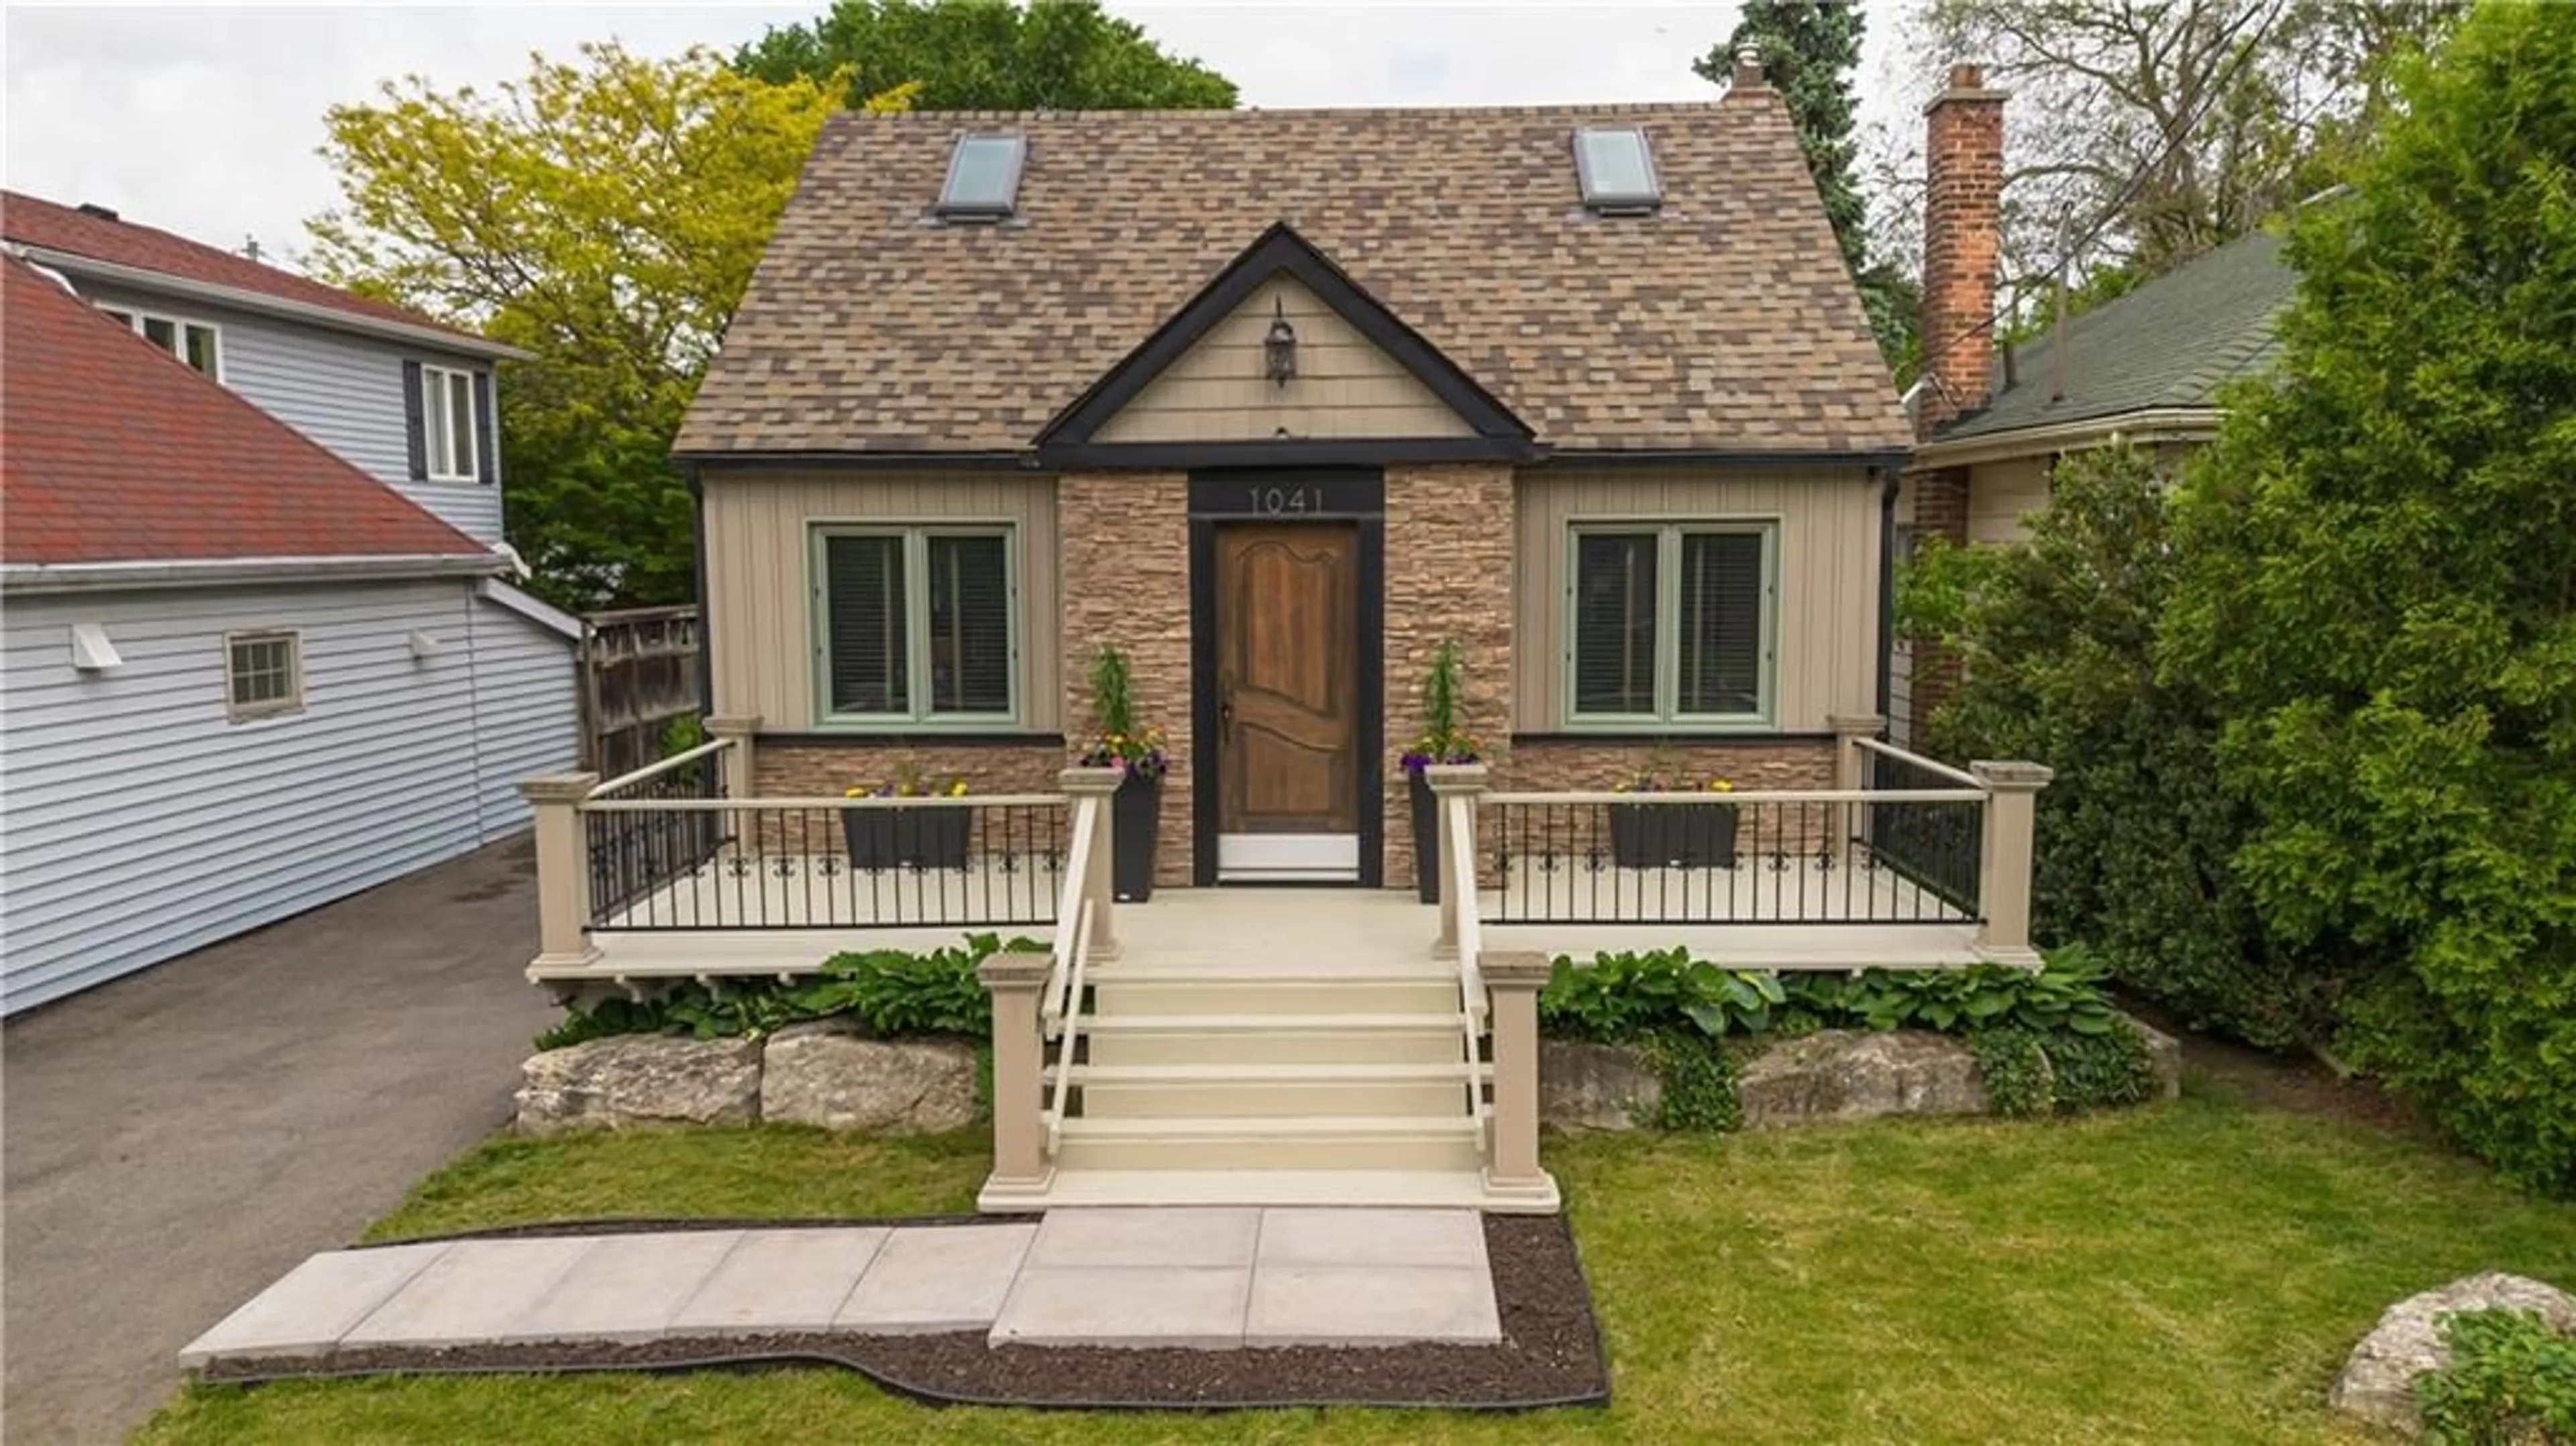 Home with brick exterior material for 1041 PLAINS VIEW Ave, Burlington Ontario L7T 1V4